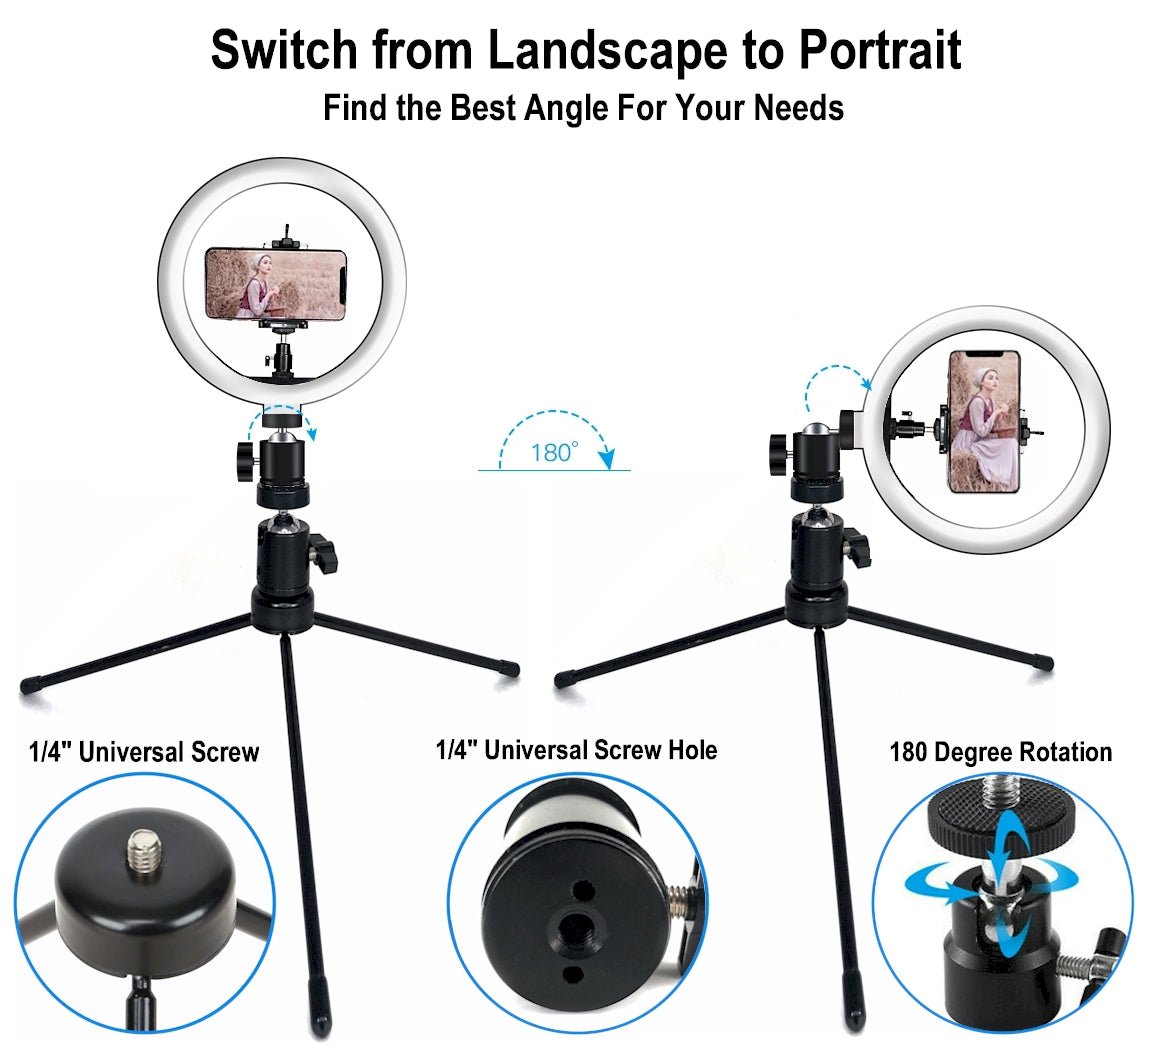 Phone Holder Selfie Ring Light Adjustable Tripod Stand - Temu